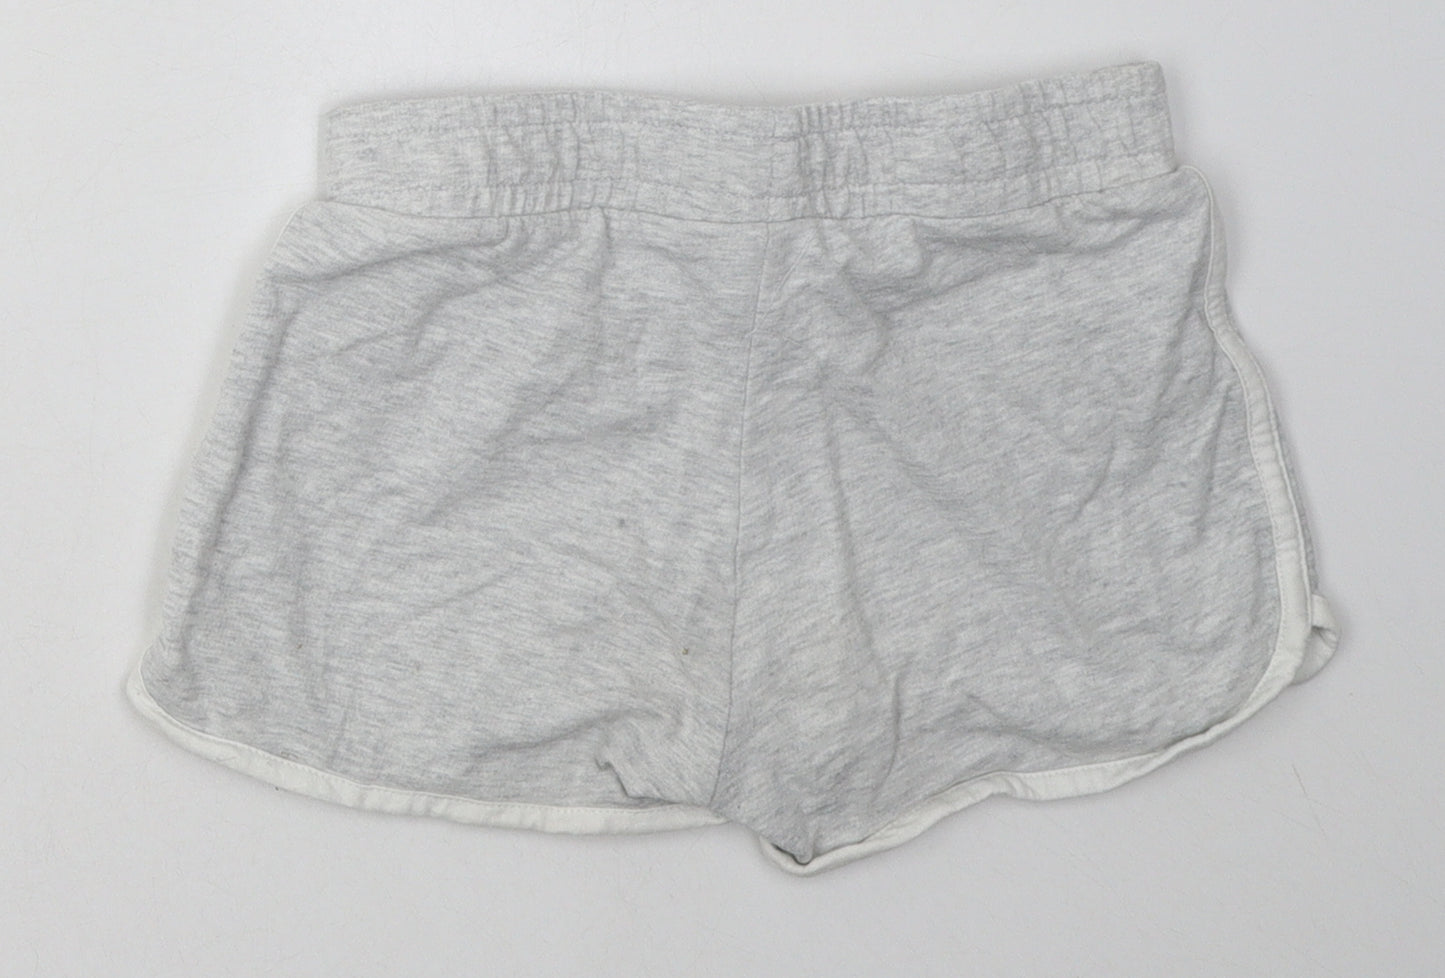 F&F Girls Grey  Cotton Sweat Shorts Size 8-9 Years  Regular Tie